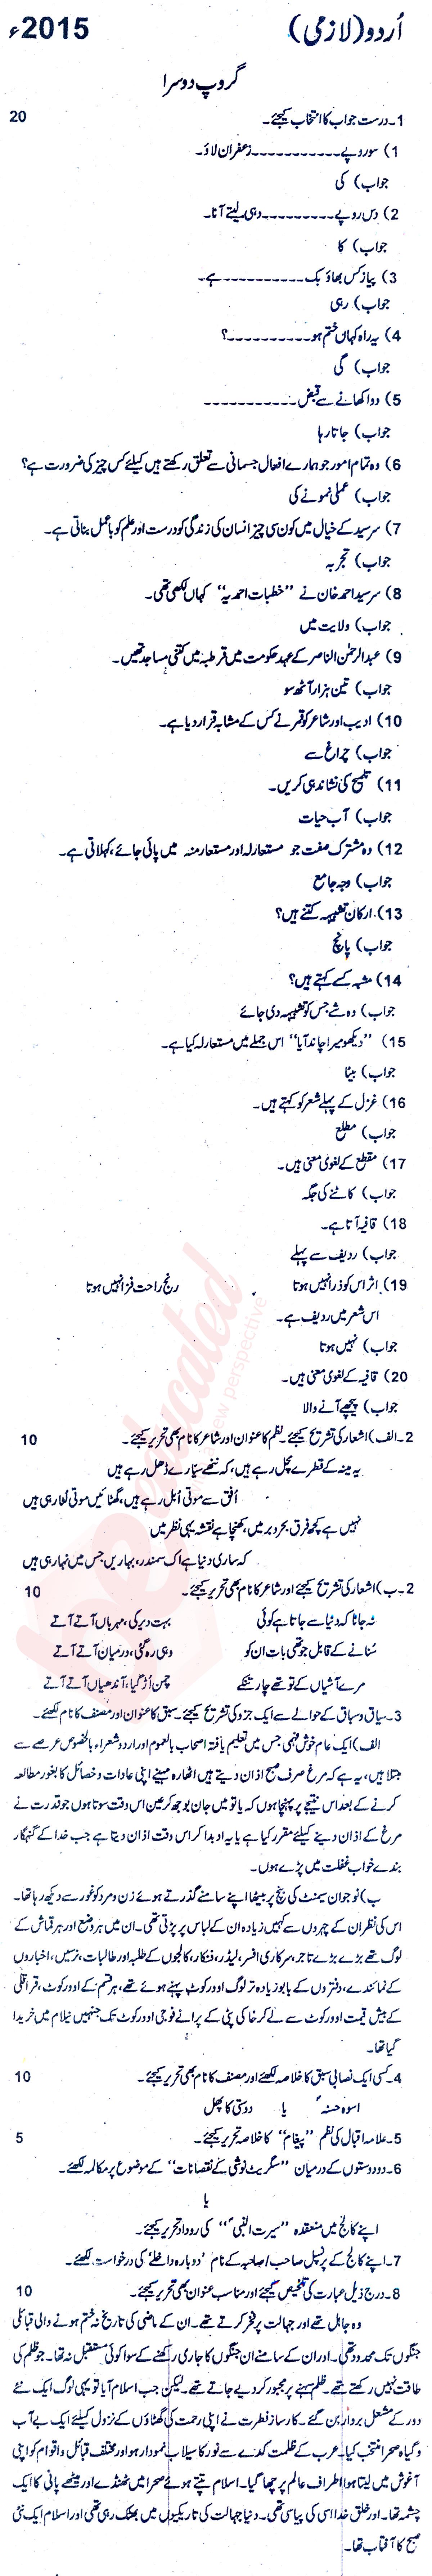 Urdu 11th class Past Paper Group 2 BISE Rawalpindi 2015